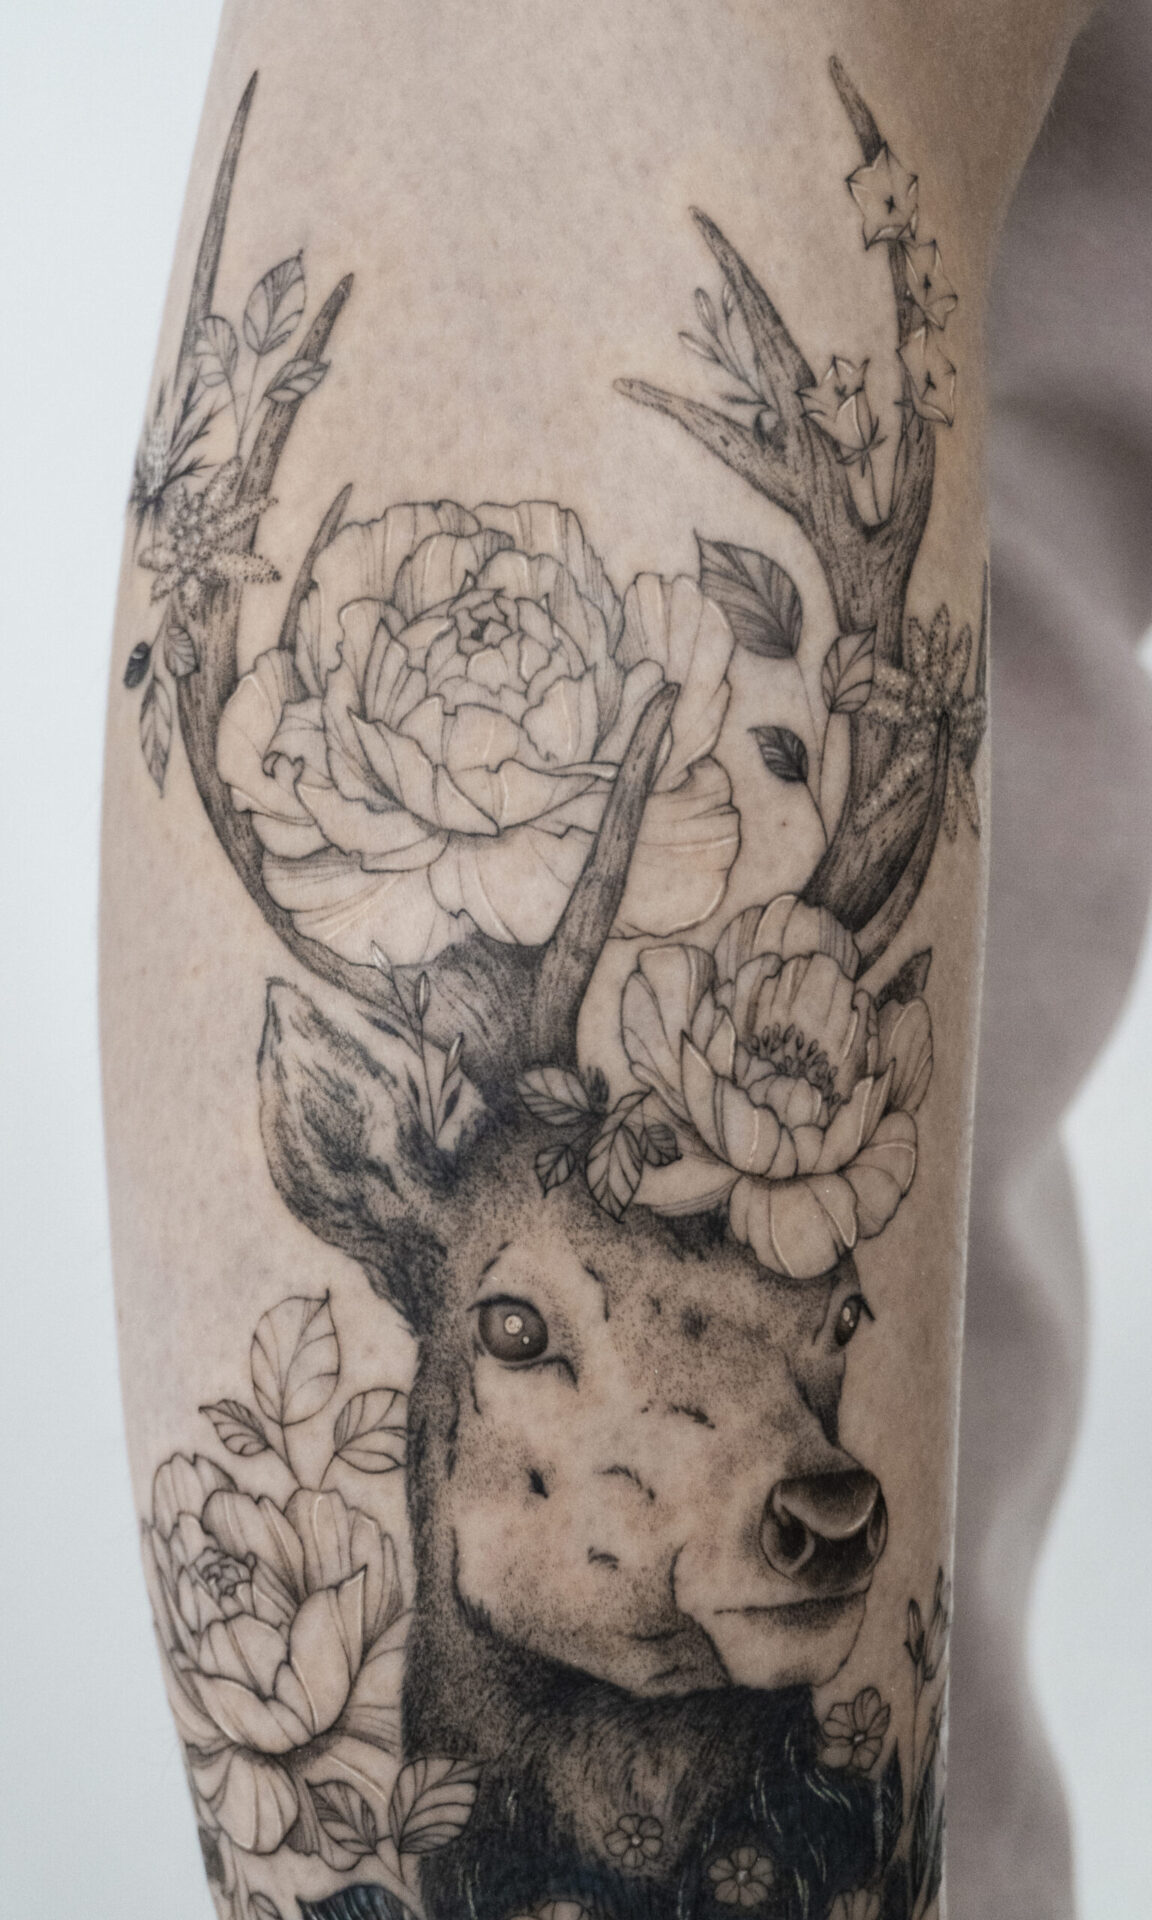 lower leg fineline deer flower tattoo with cover up from smasli ink an female tattoo artist working in salzburg austria